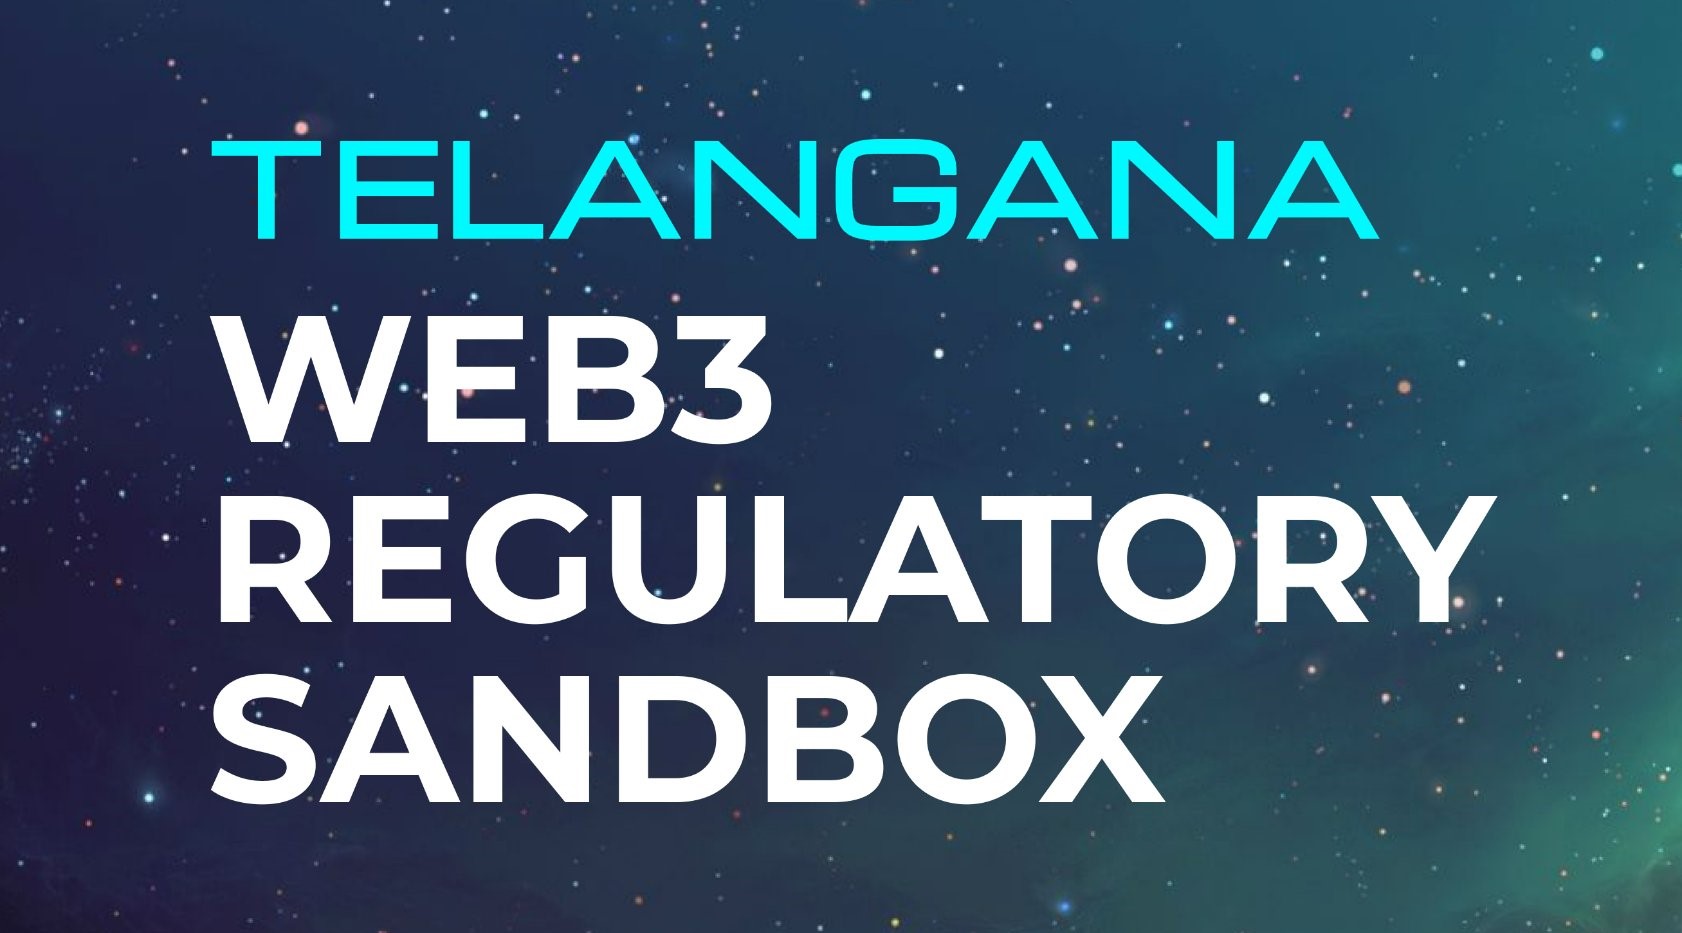 Telangana officially launched the Web 3.0 Regulatory Sandbox